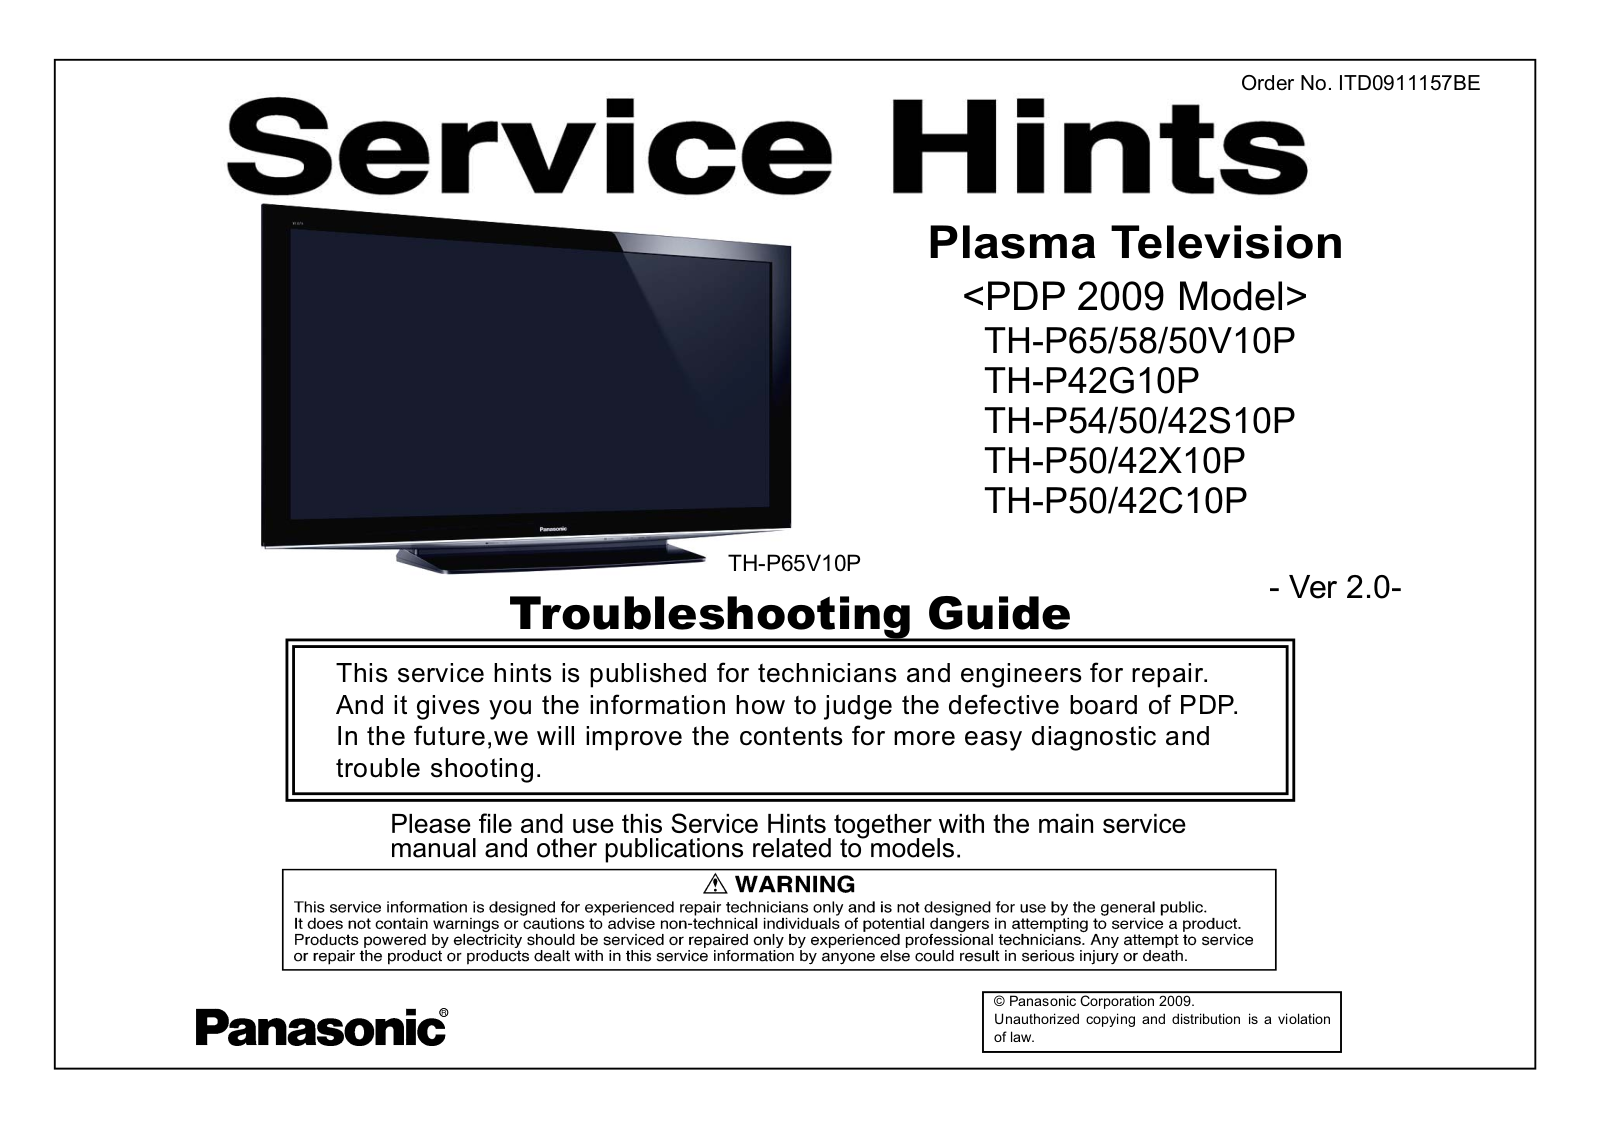 Panasonic th p42c10p, th p42x10p, th p50c10p, th p54s10p, th p50v10p schematic